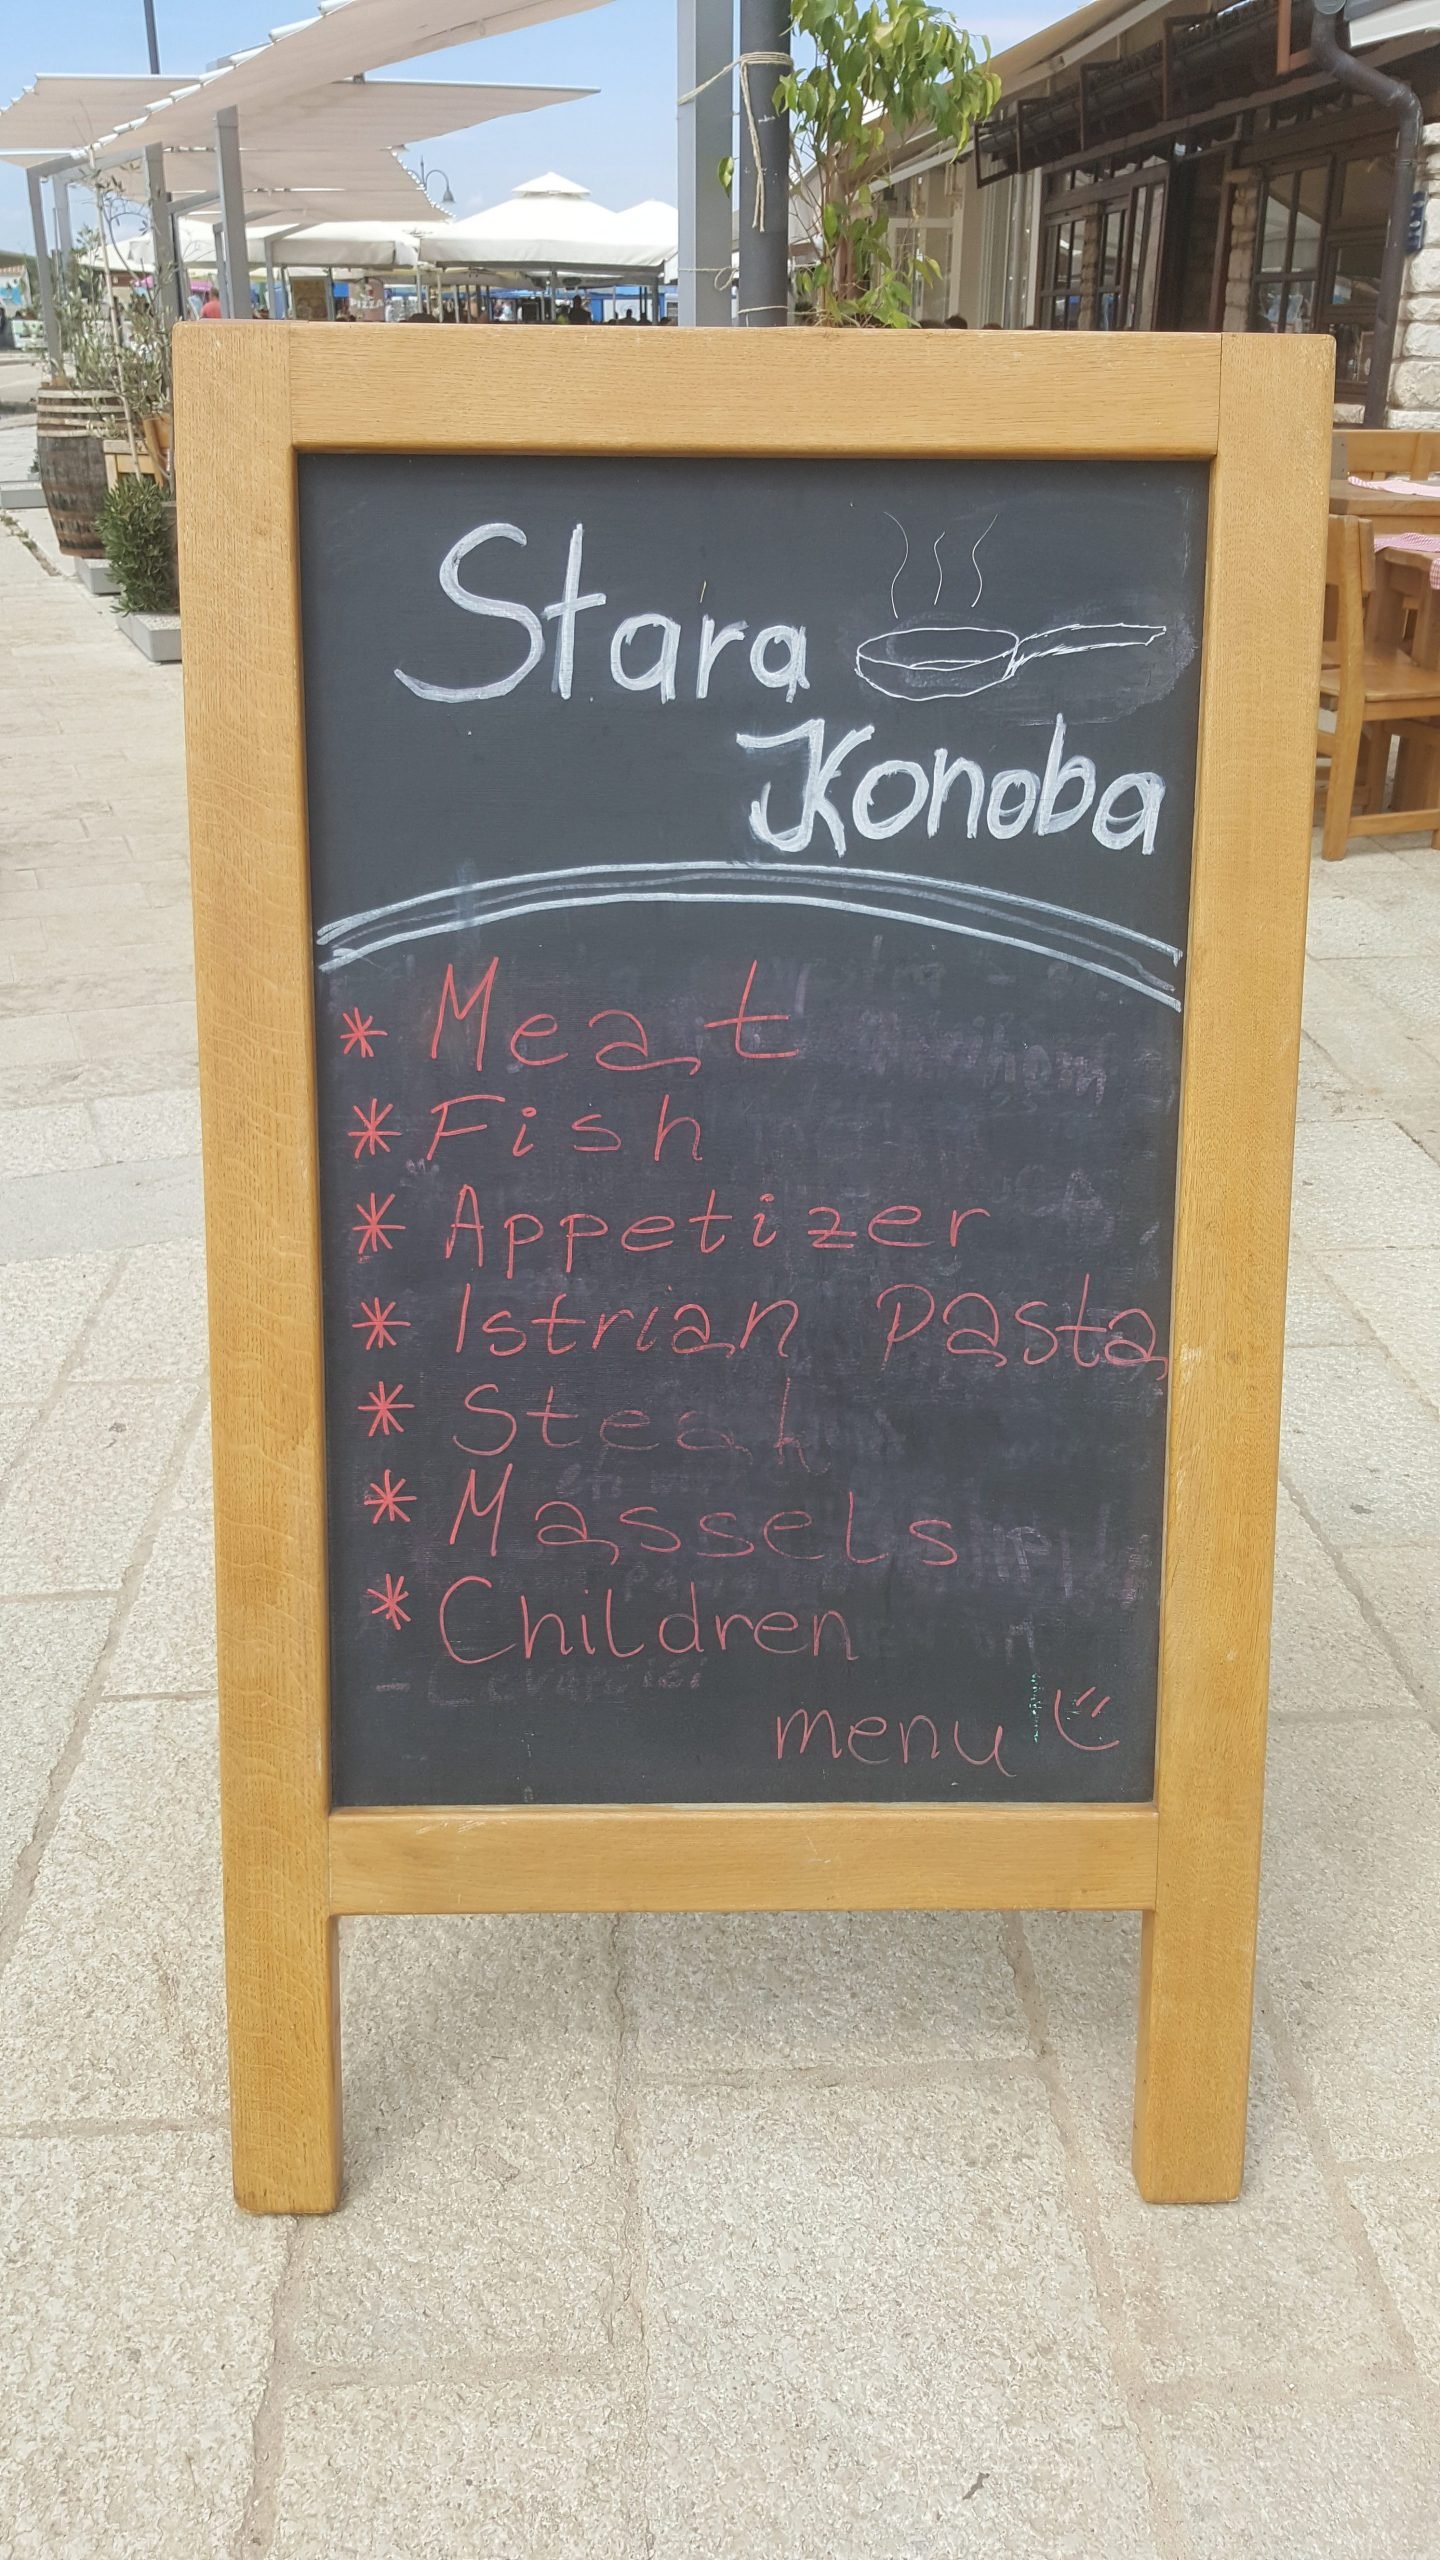 Stara Konoba, a great place for seafood, despite having children on the menu......